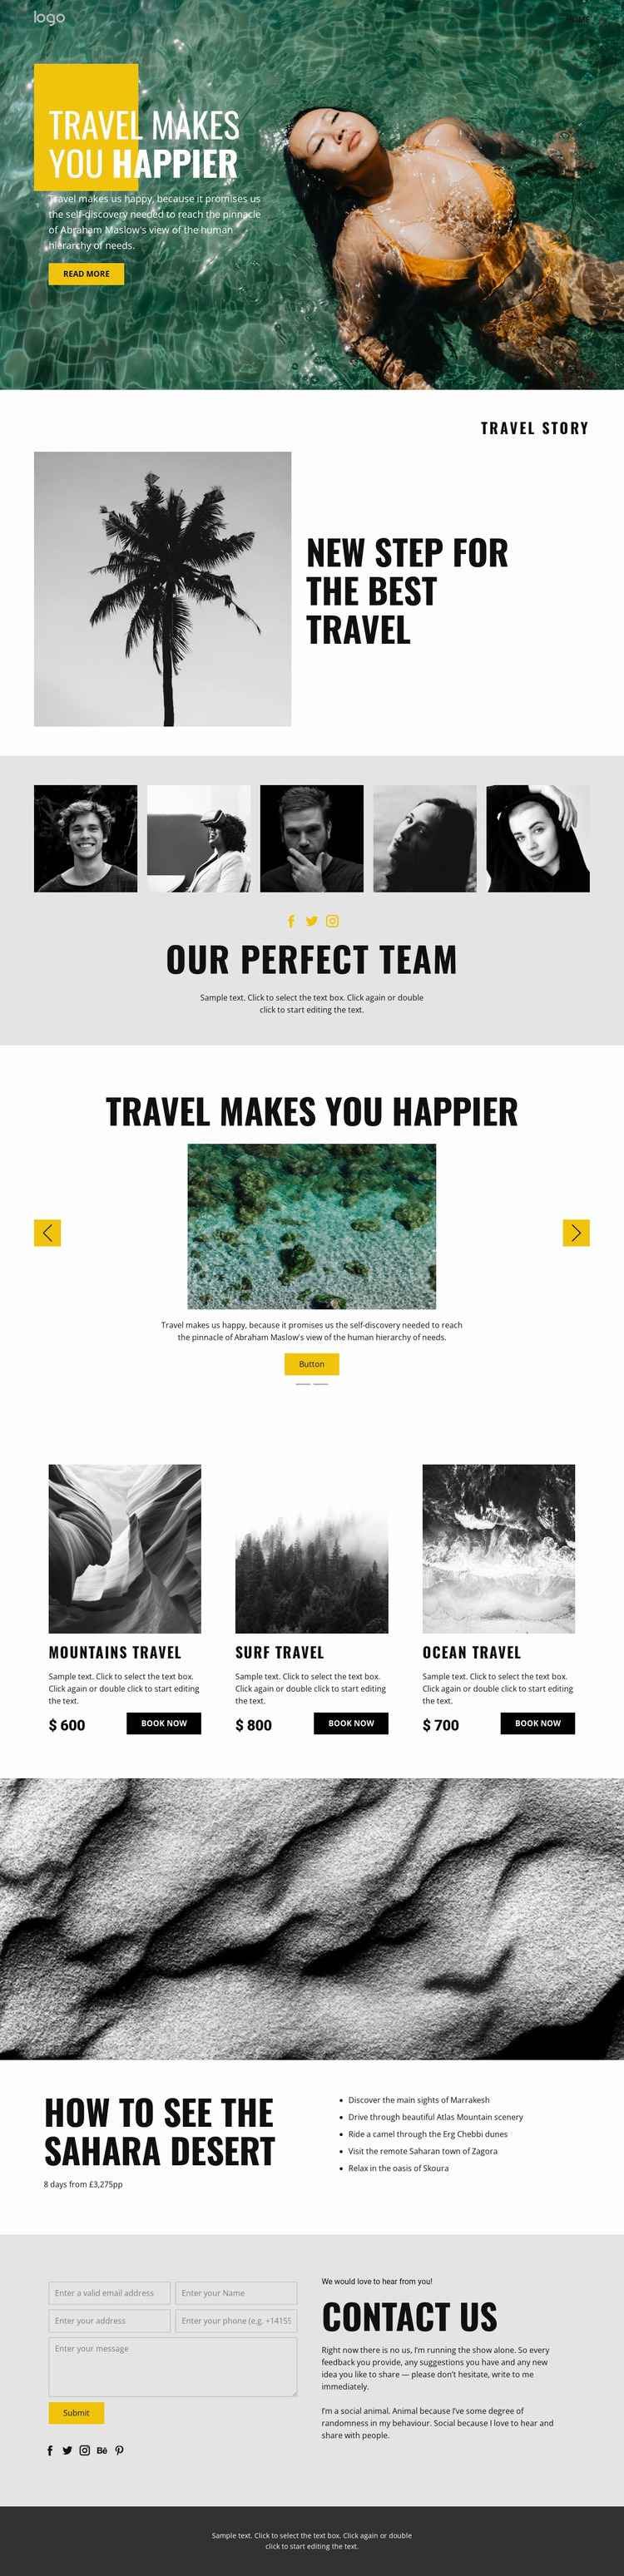 Happy people deserve travel Website Mockup